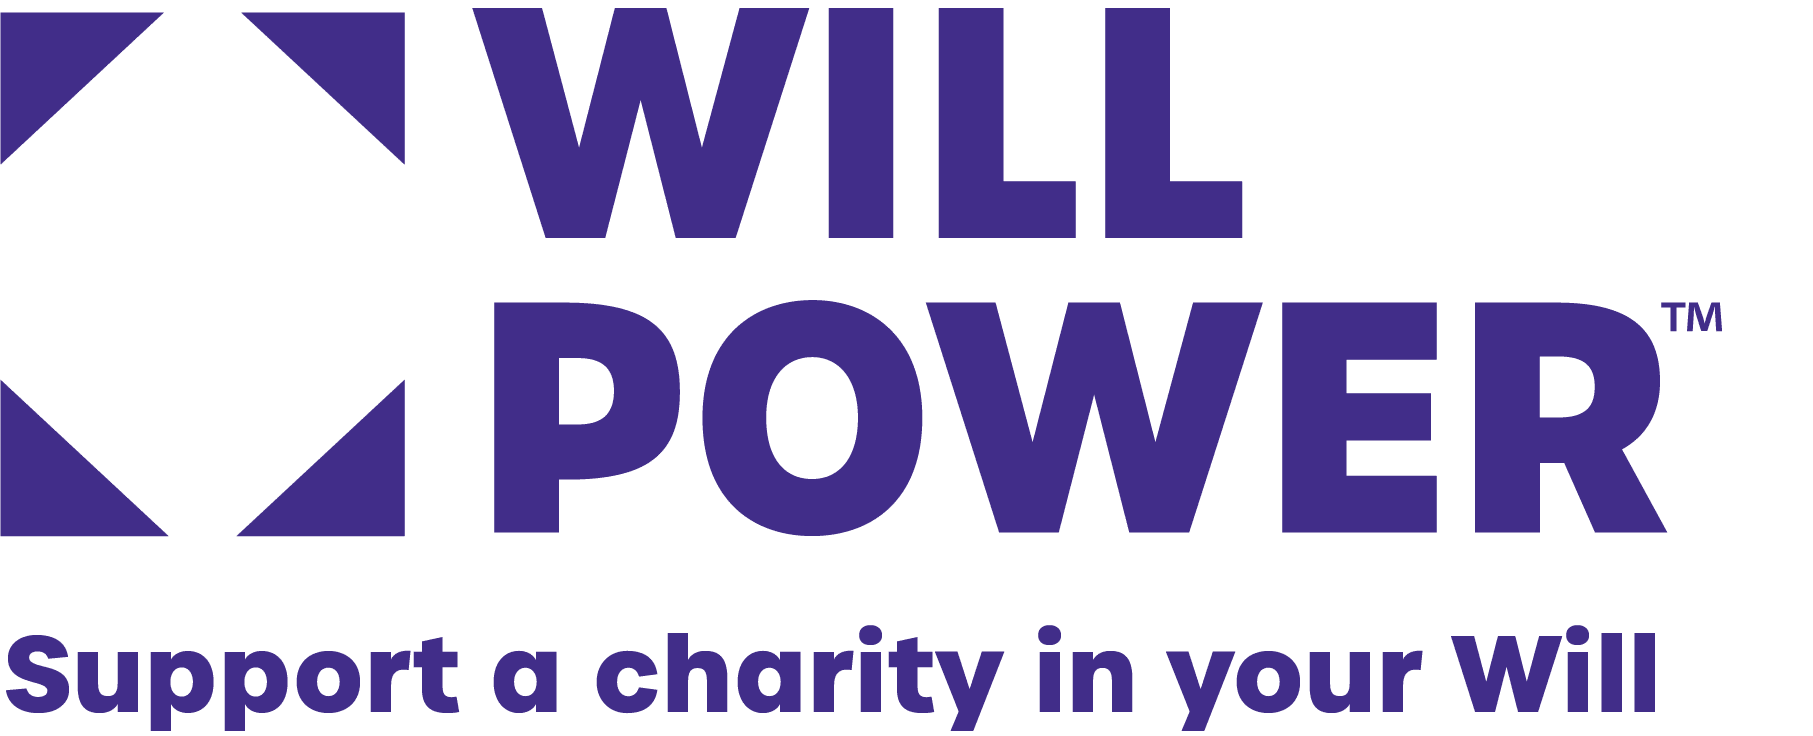 Will power logo